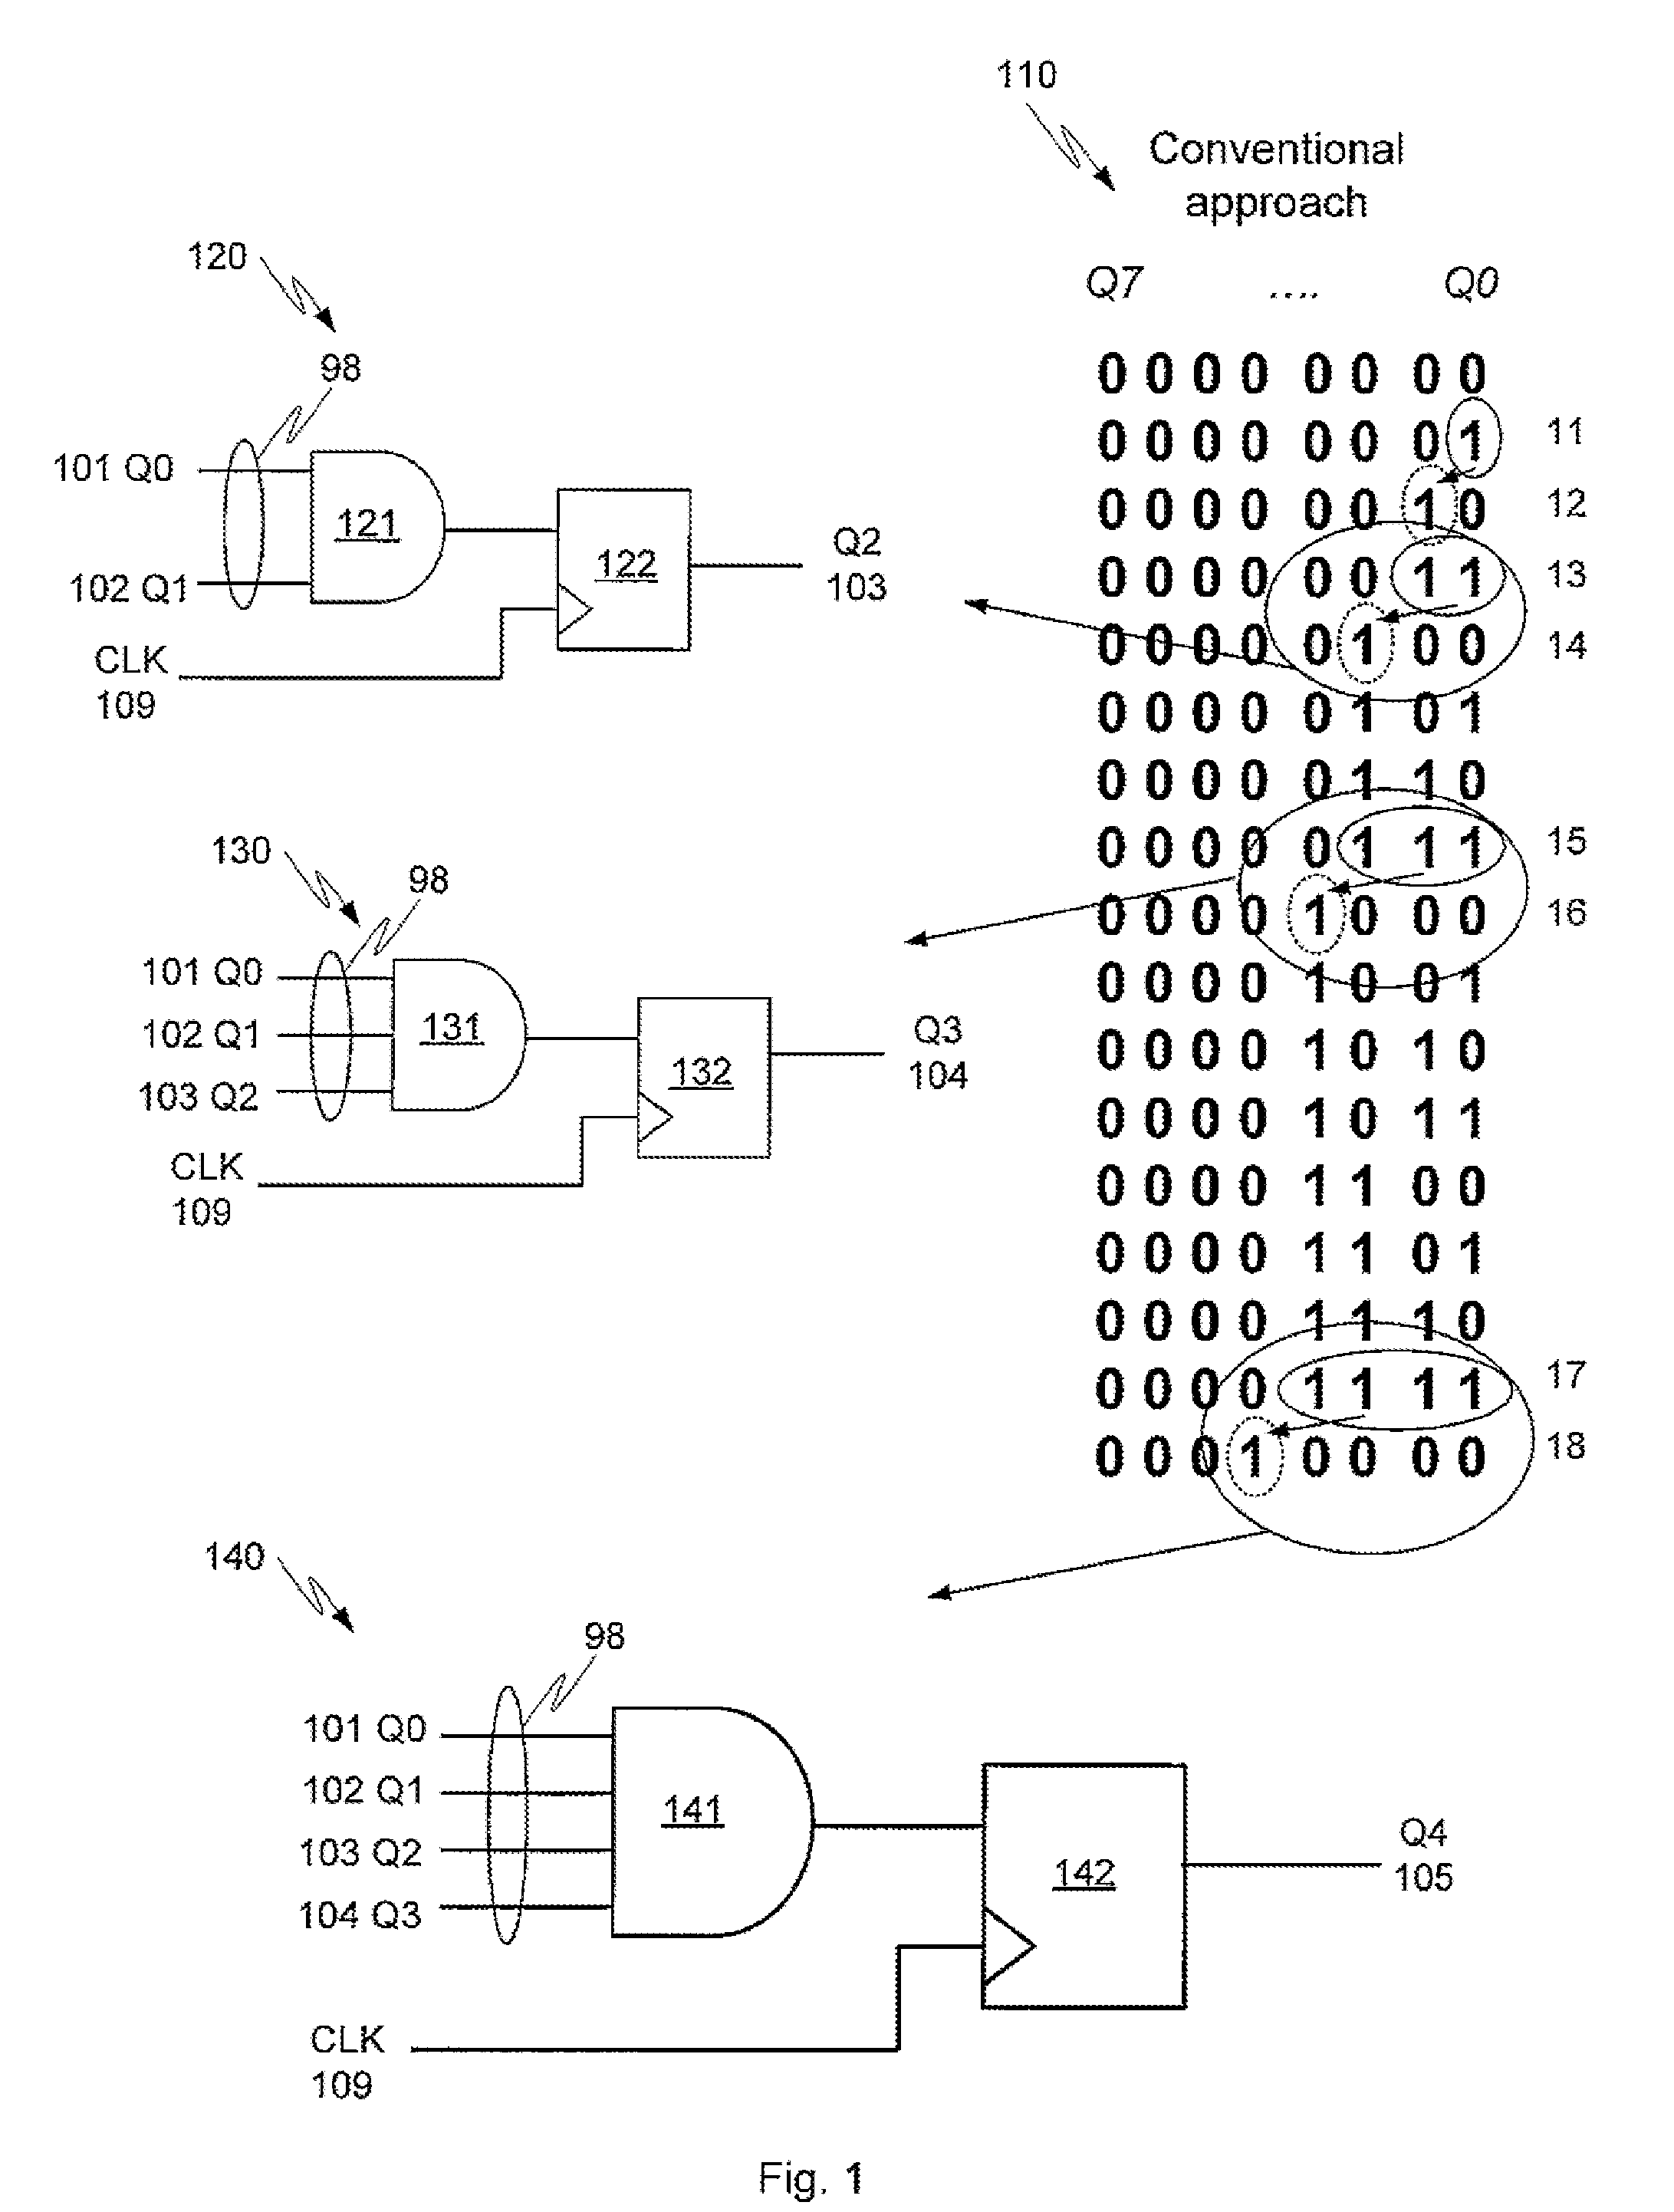 Digital self-gated binary counter